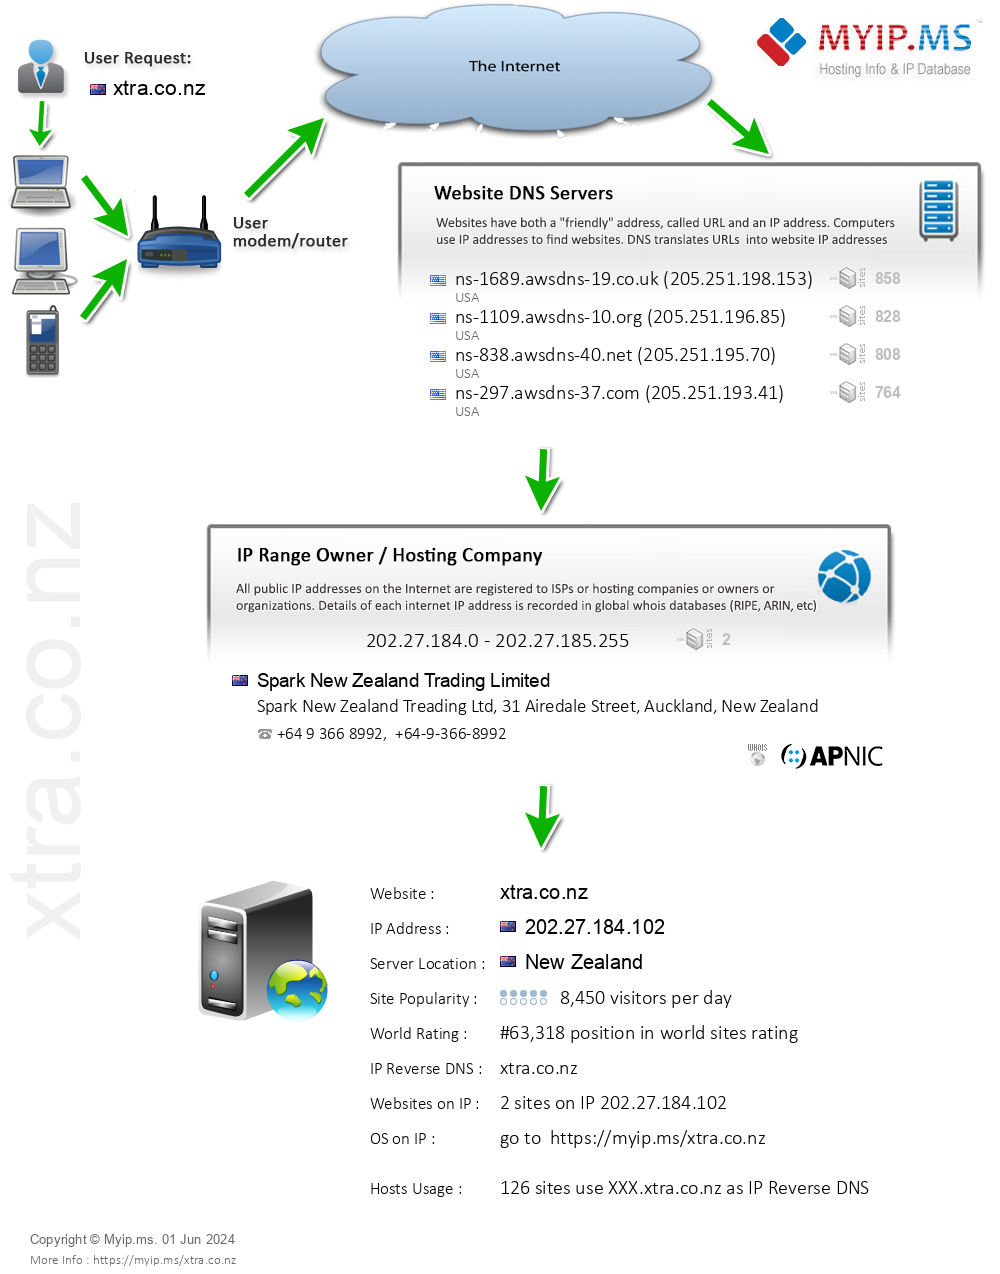 Xtra.co.nz - Website Hosting Visual IP Diagram